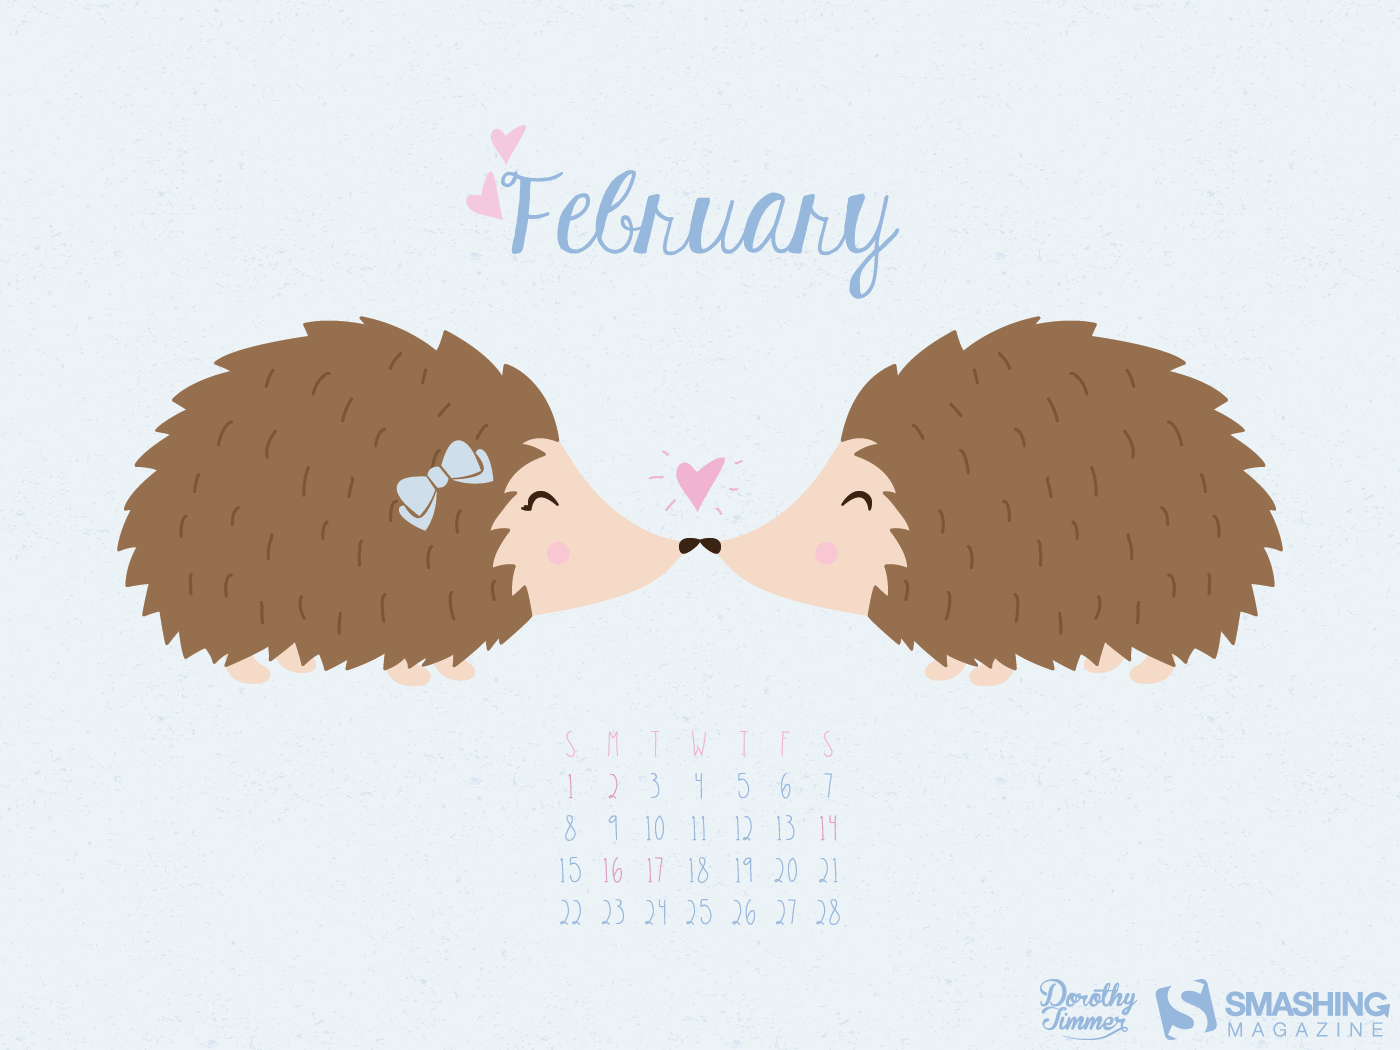 Desktop Wallpaper Calendars: February 2015